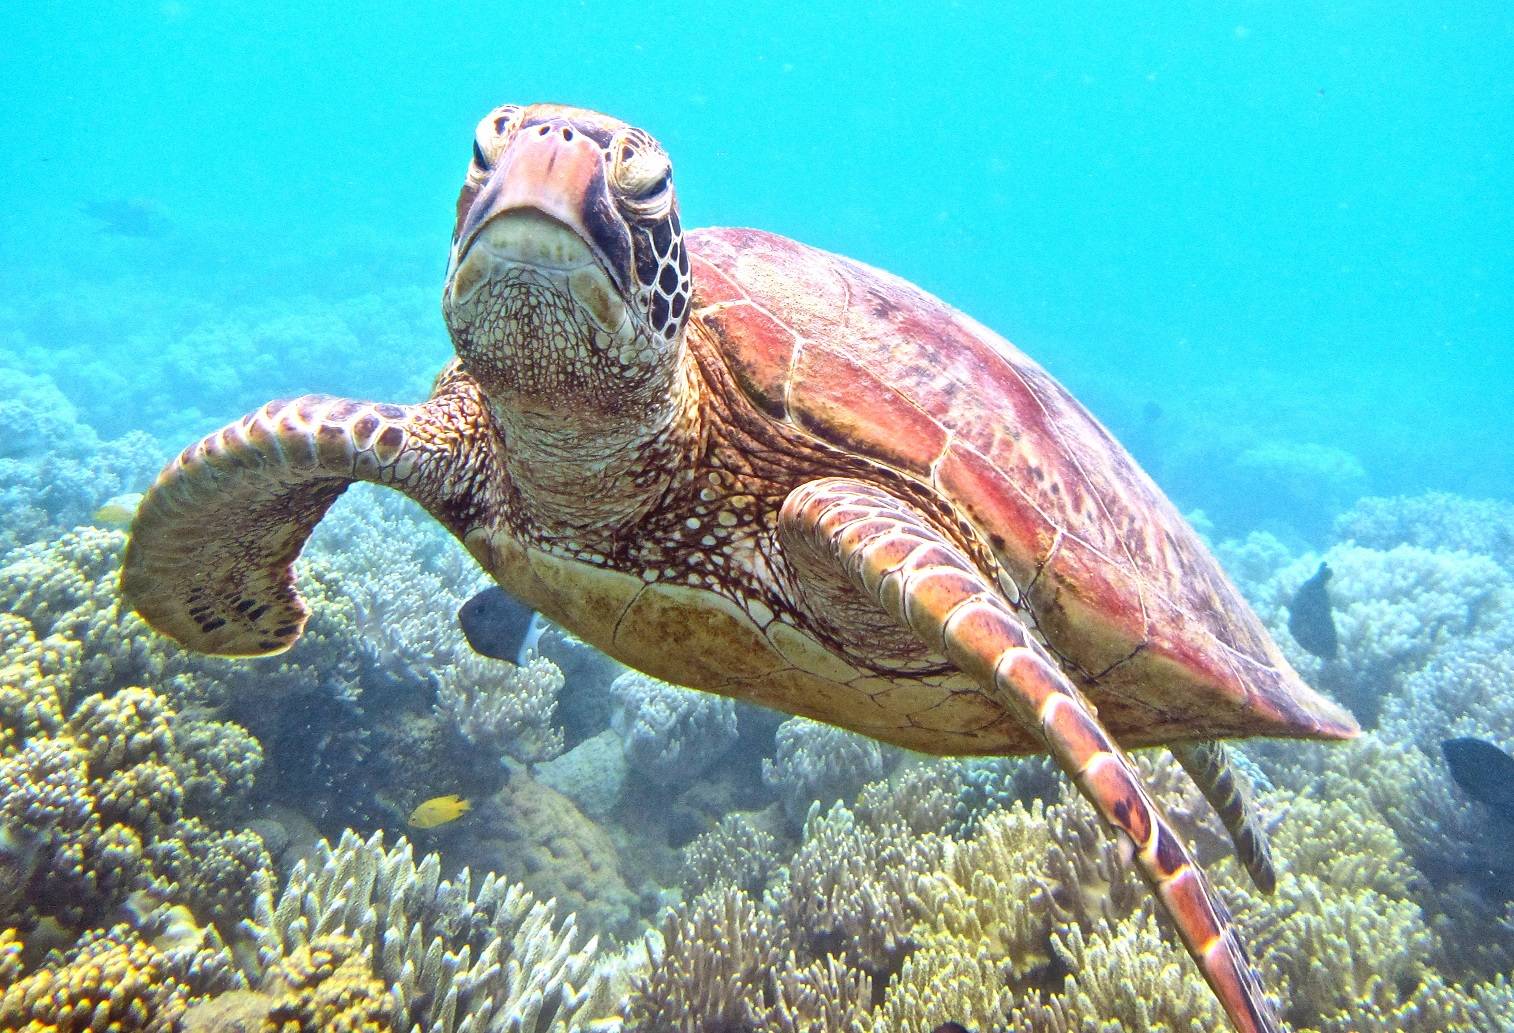 Sea Turtle off Low Isle, Great Barrier Reef